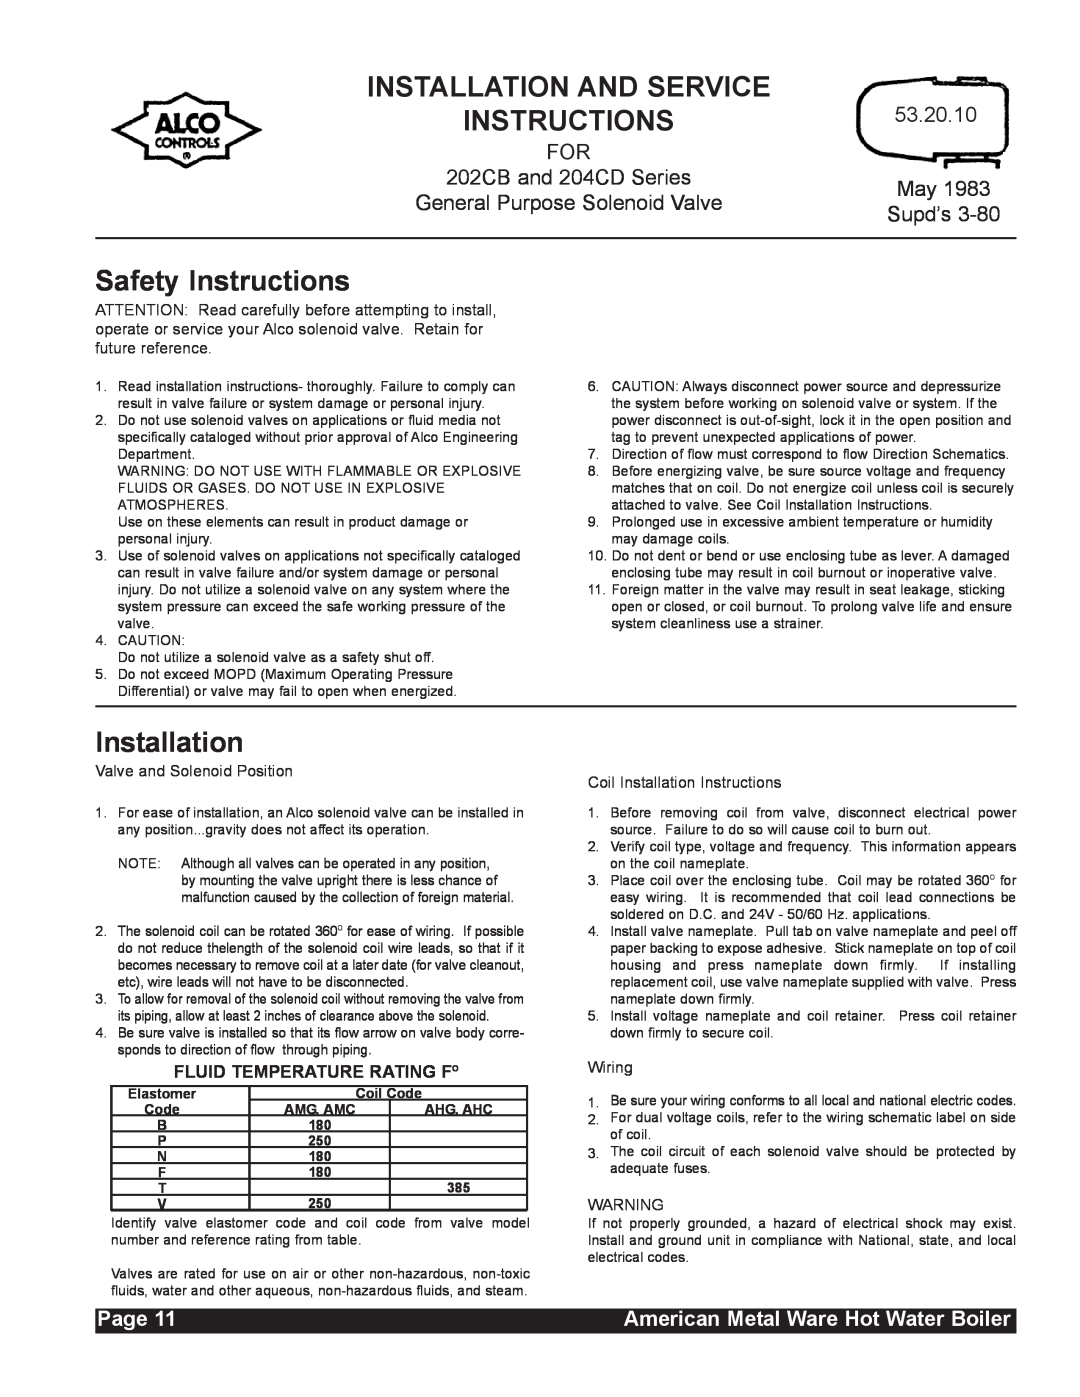 Grindmaster 815 INSTALLATION AND SERVICE INSTRUCTIONS53.20.10, Safety Instructions, Installation, Page, Wiring, Coil Code 